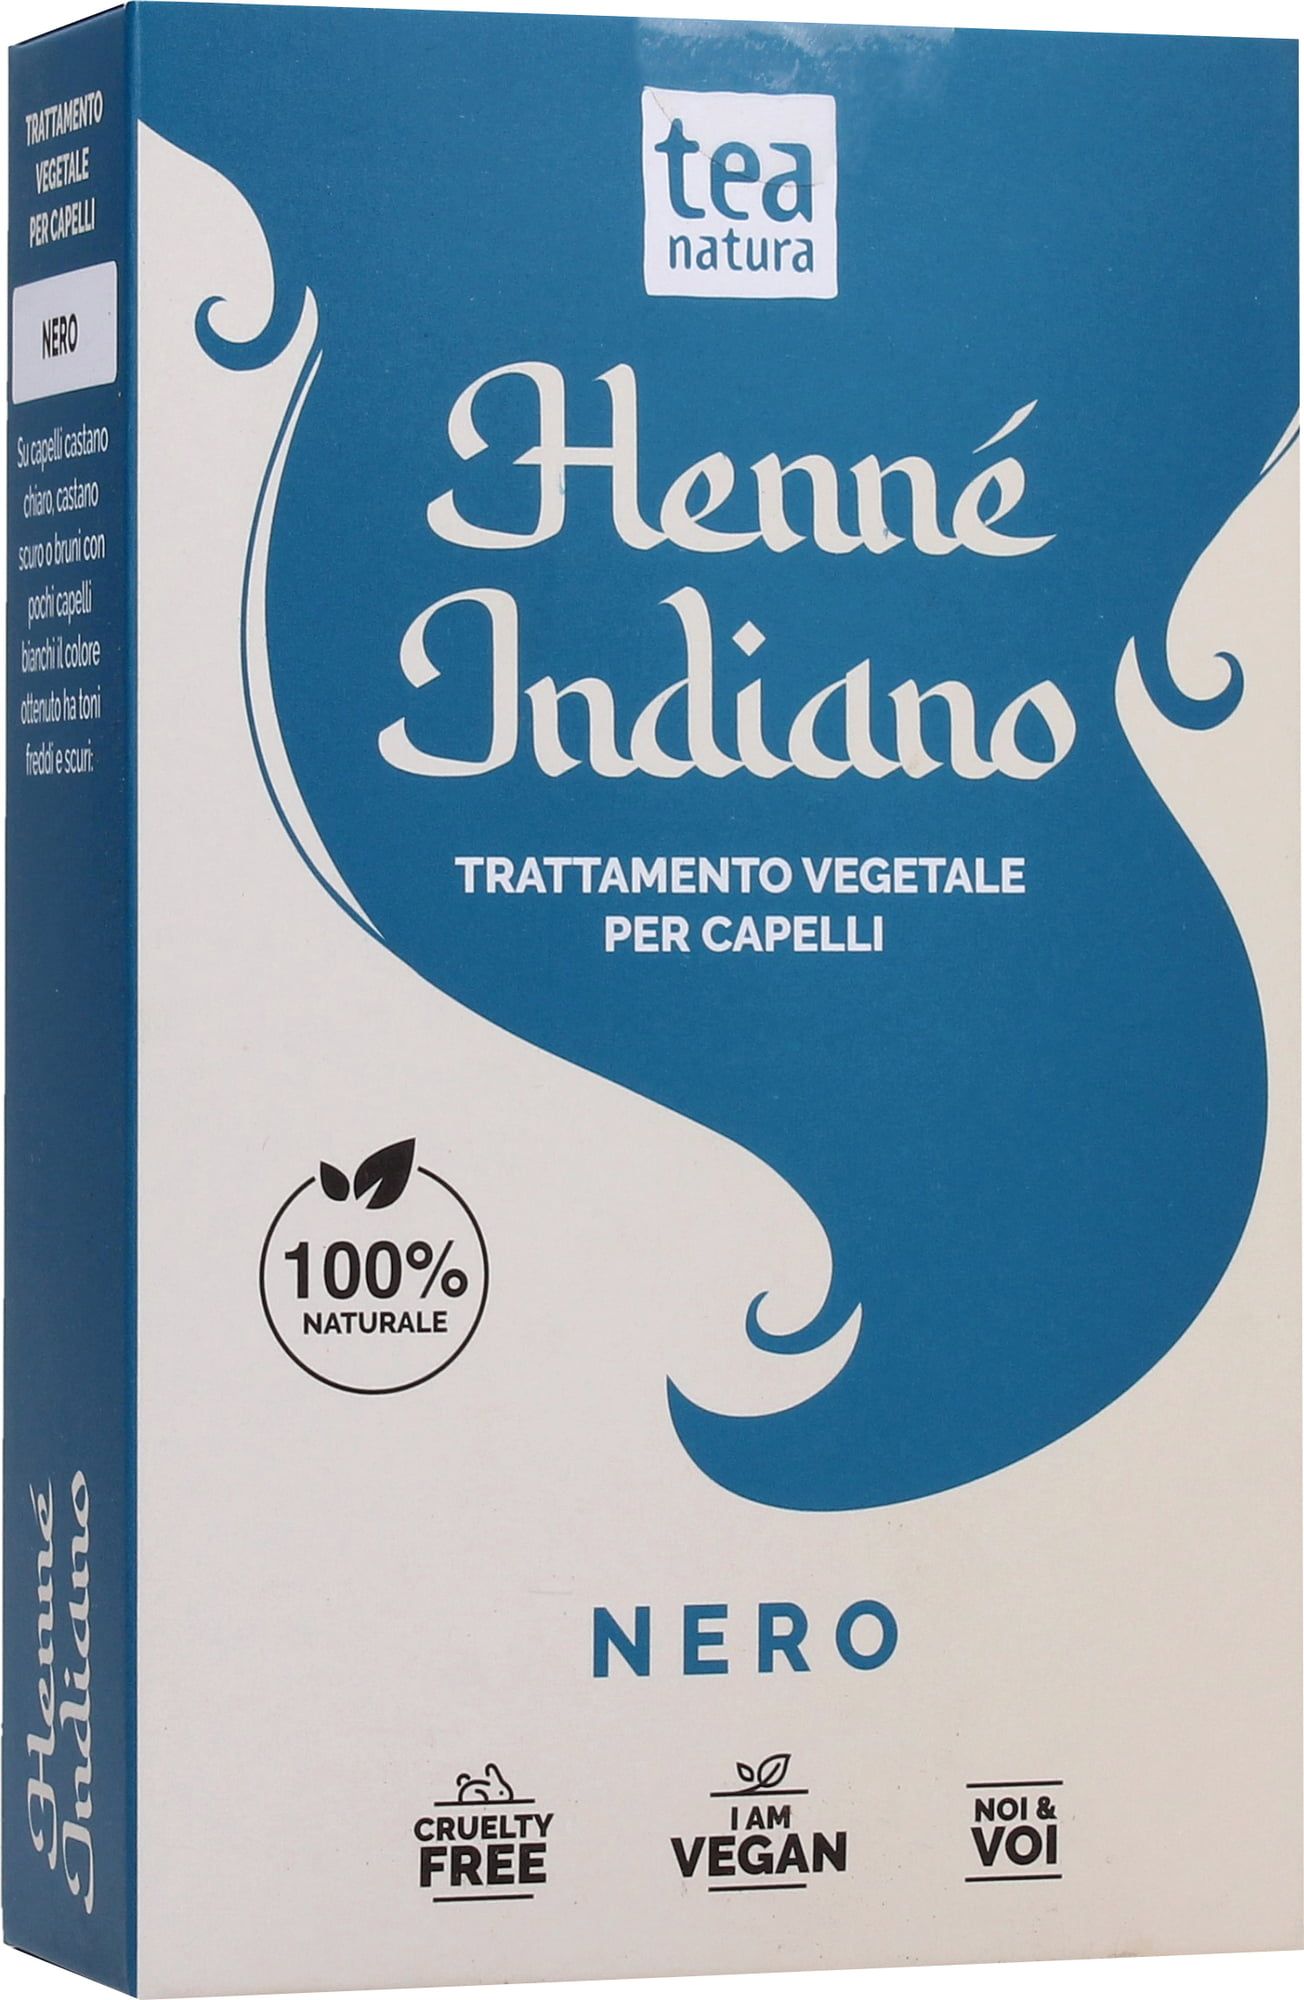 TEA Natura Musta henna indigo - 100 g